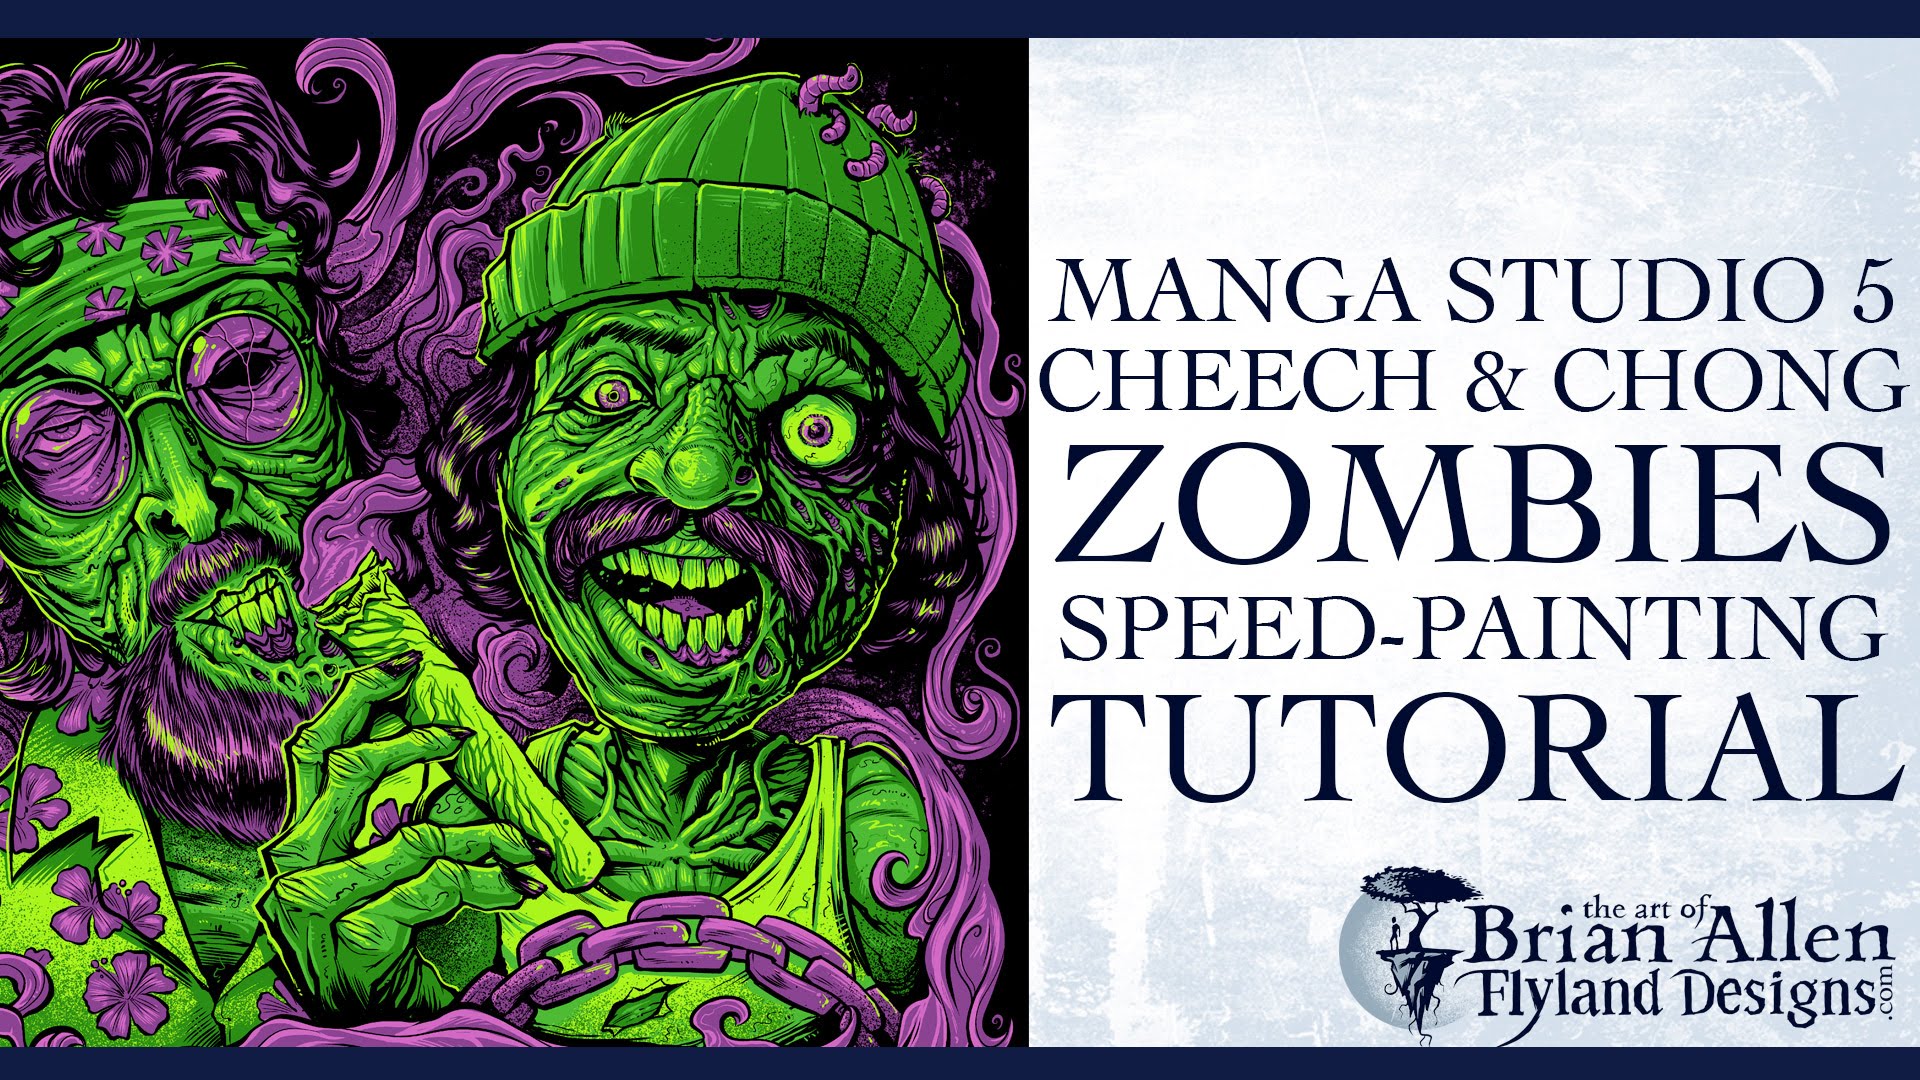 Cheech And Chong Zombies T-Shirt Manga Studio 5 speed painting ...